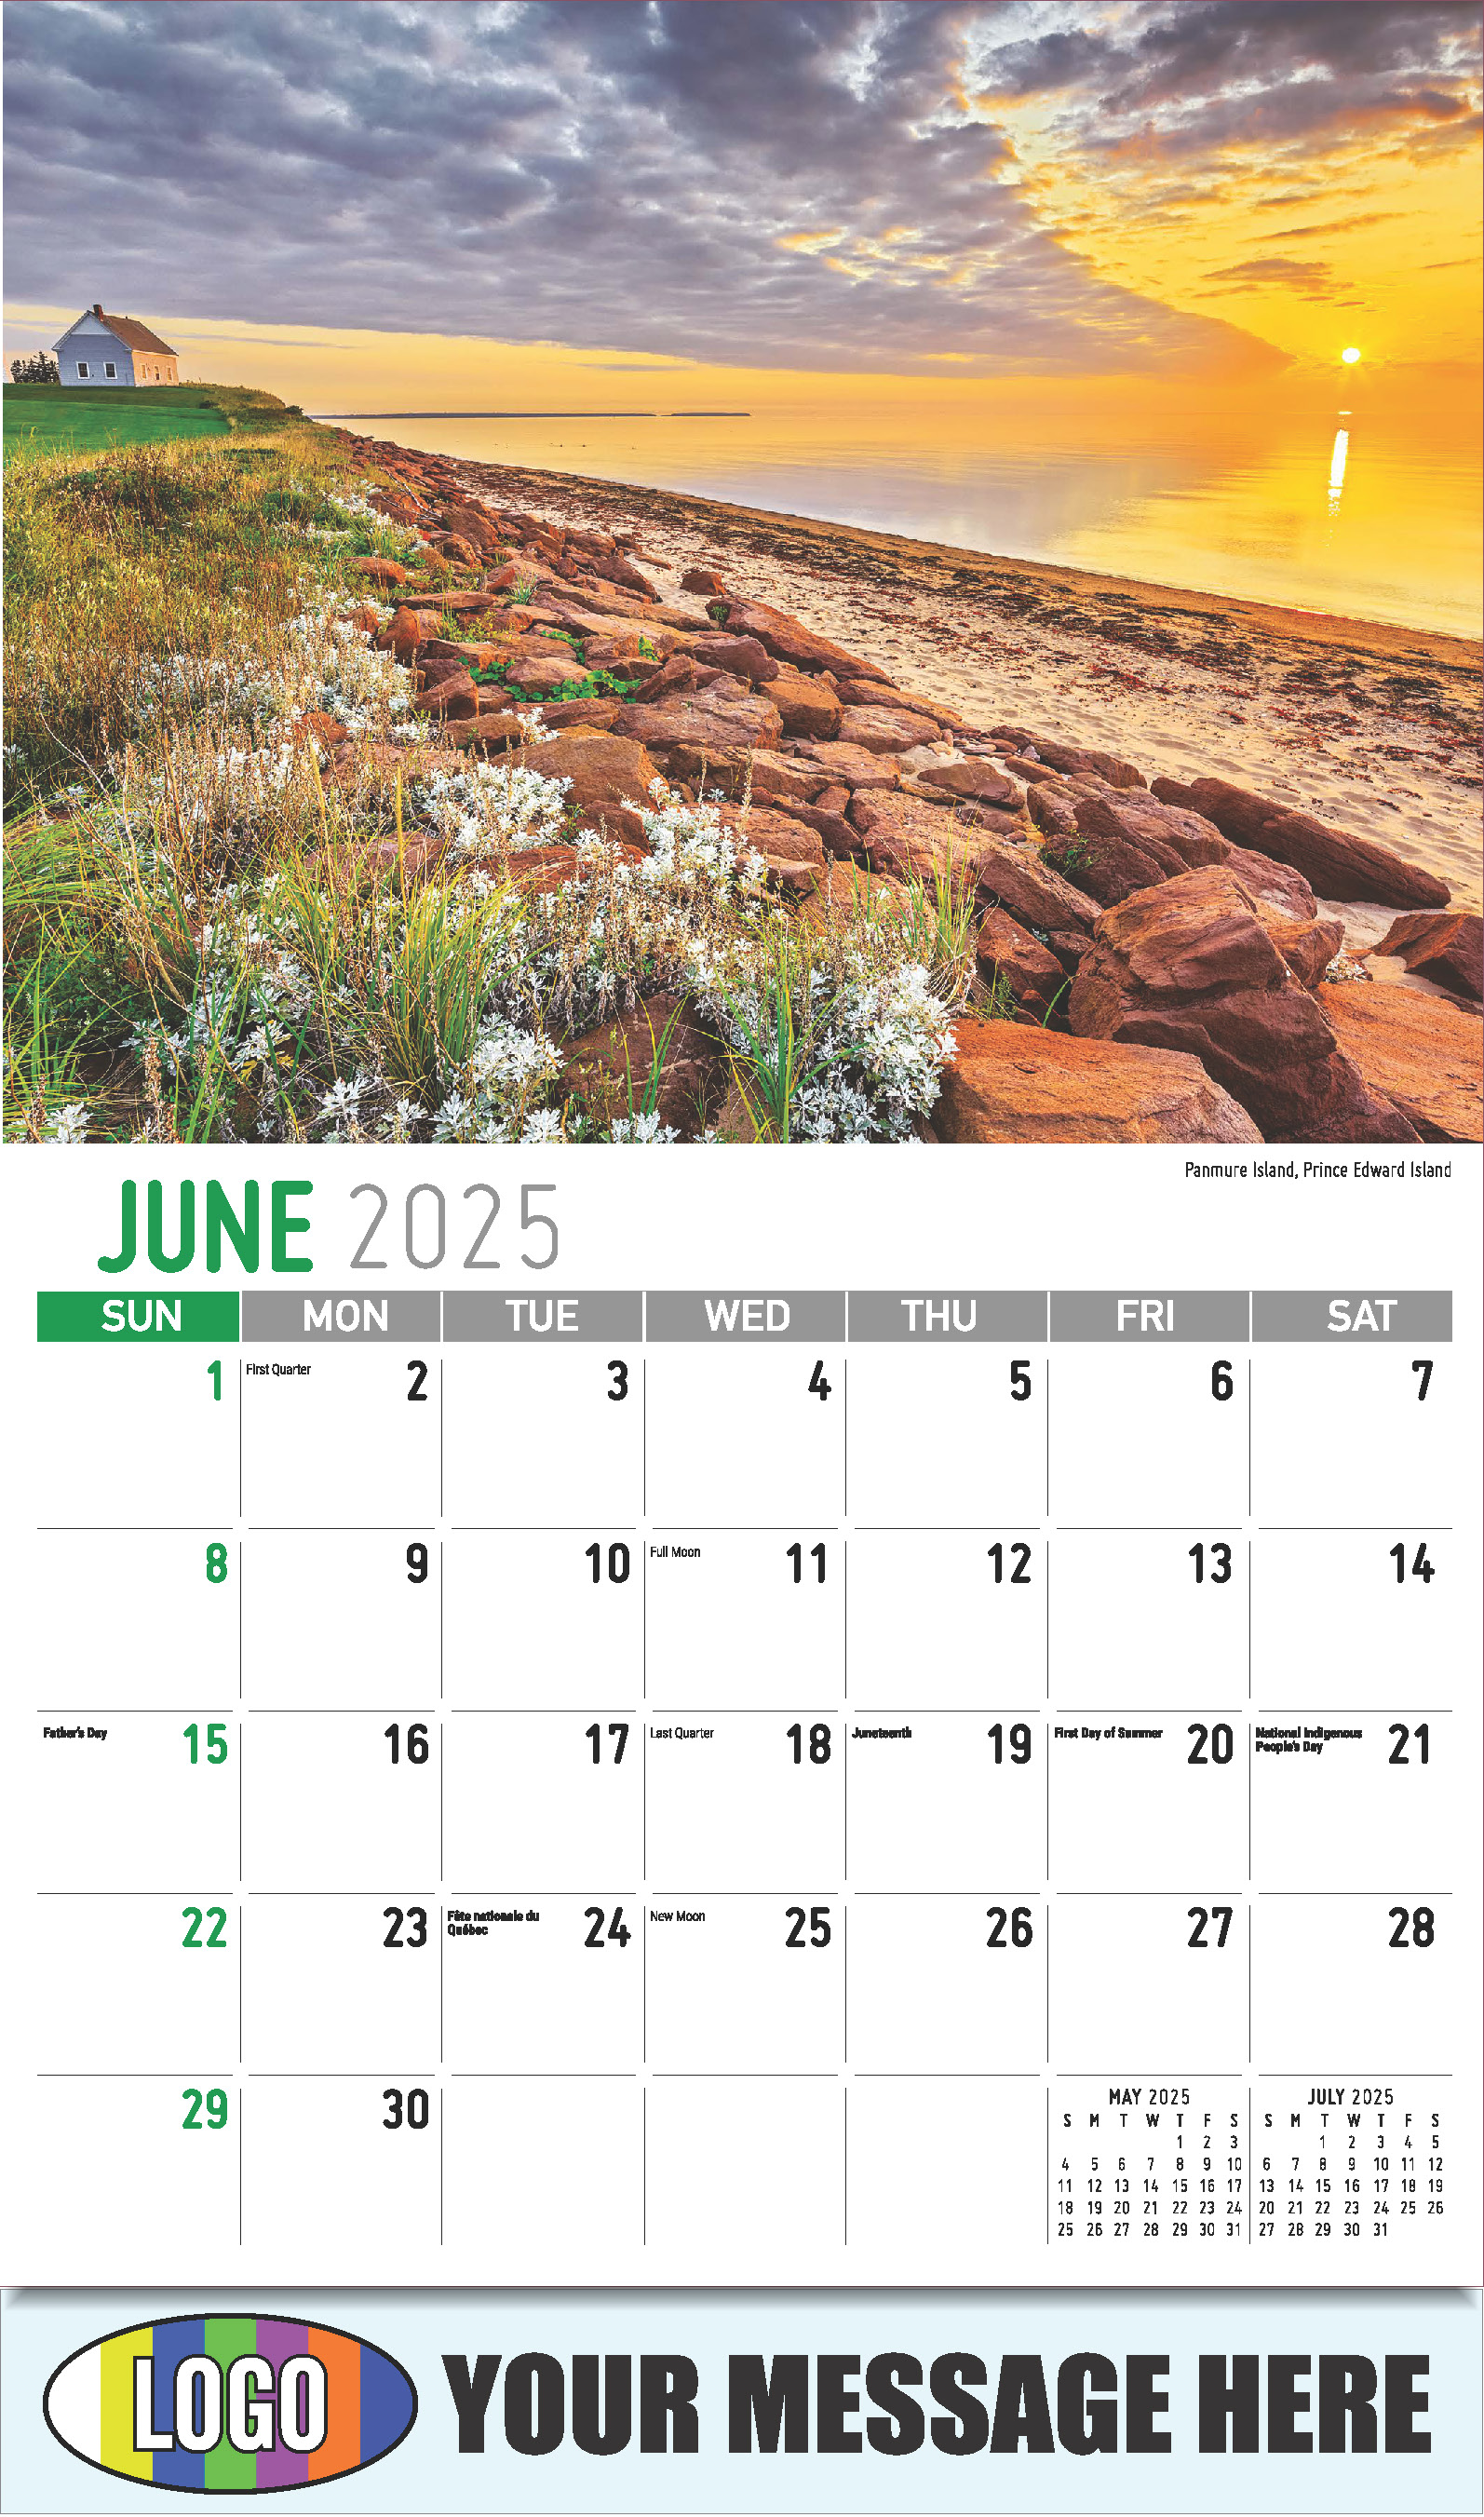 Atlantic Canada Scenic 2025 Business Promotion Calendar - June